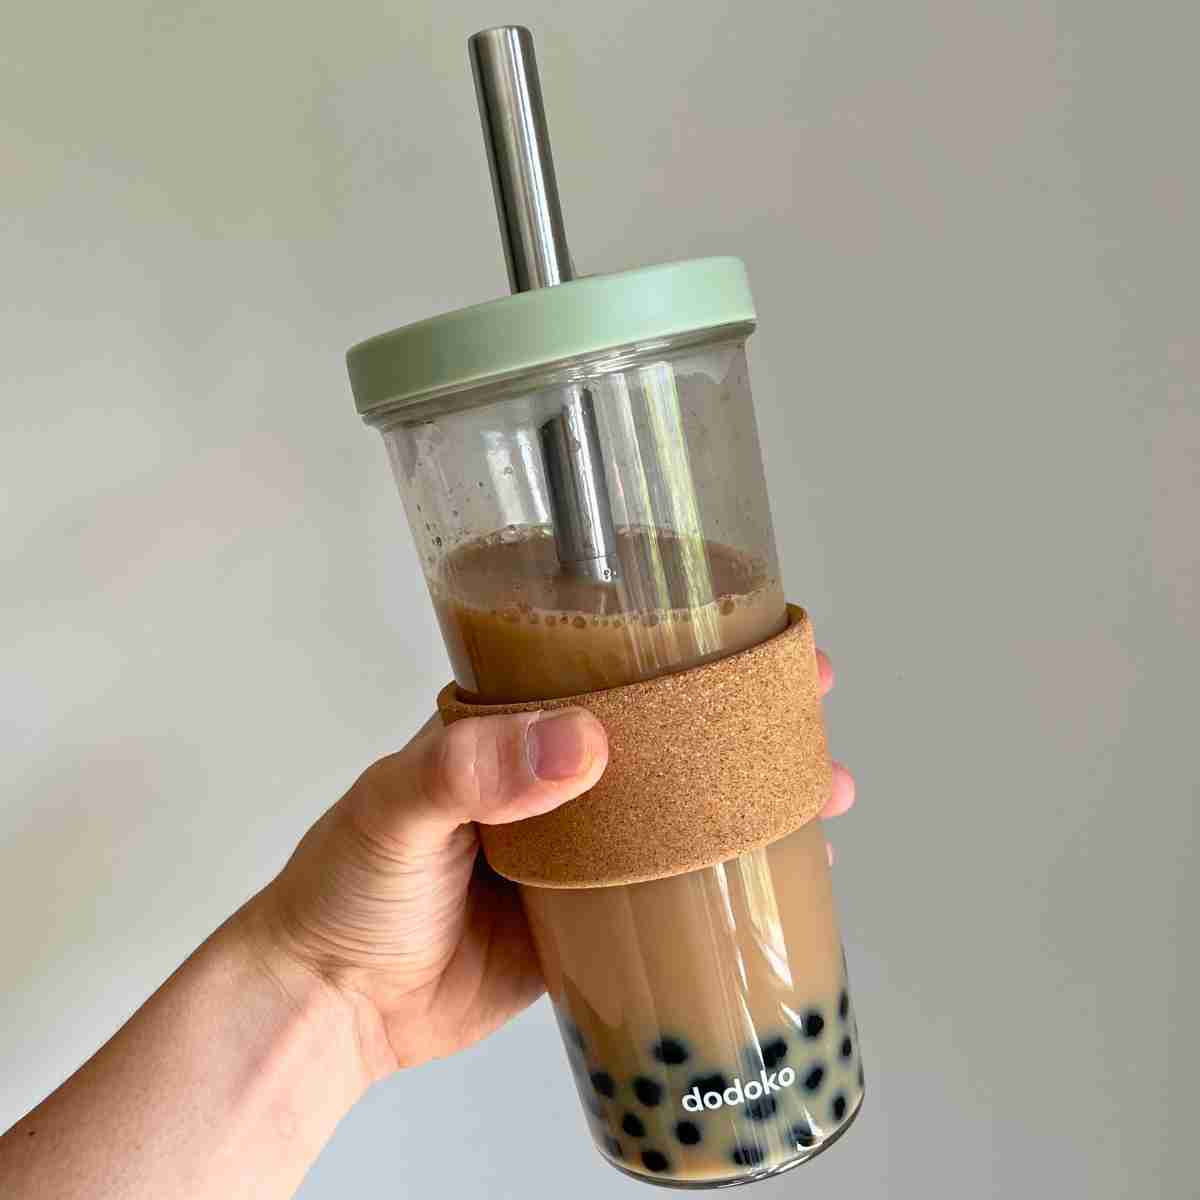 Shatterproof Reusable Boba Cup by Dodoko